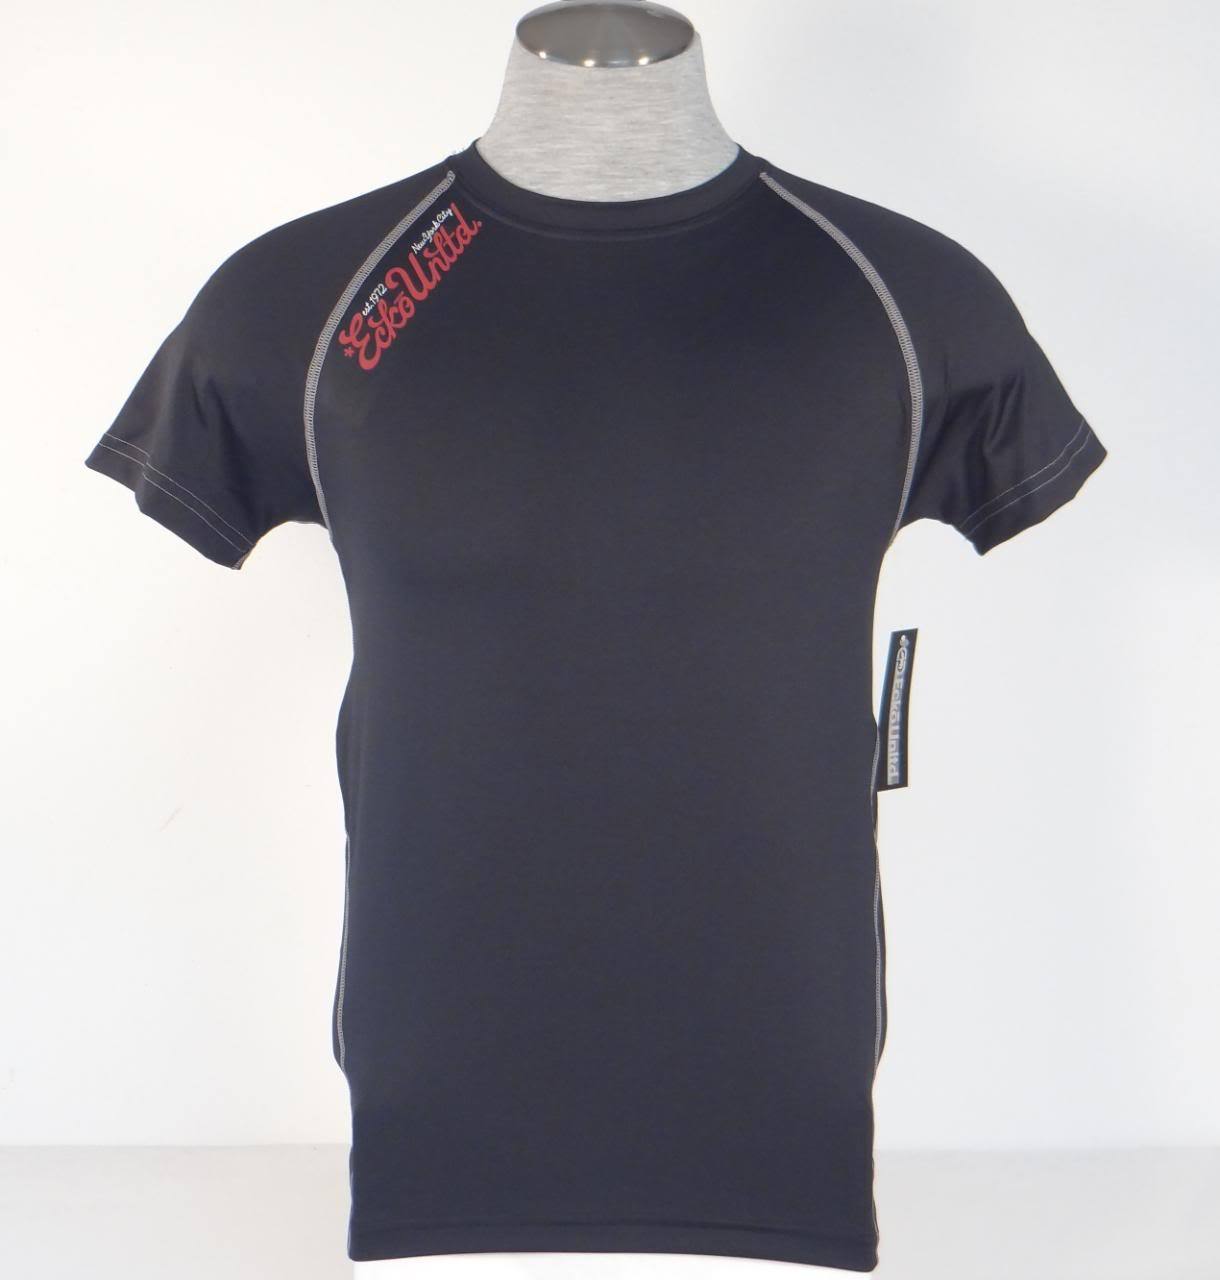 Ecko Unltd Moisture Wicking Black Short Sleeve Body Fit Tee Shirt Men's NWT - $26.99